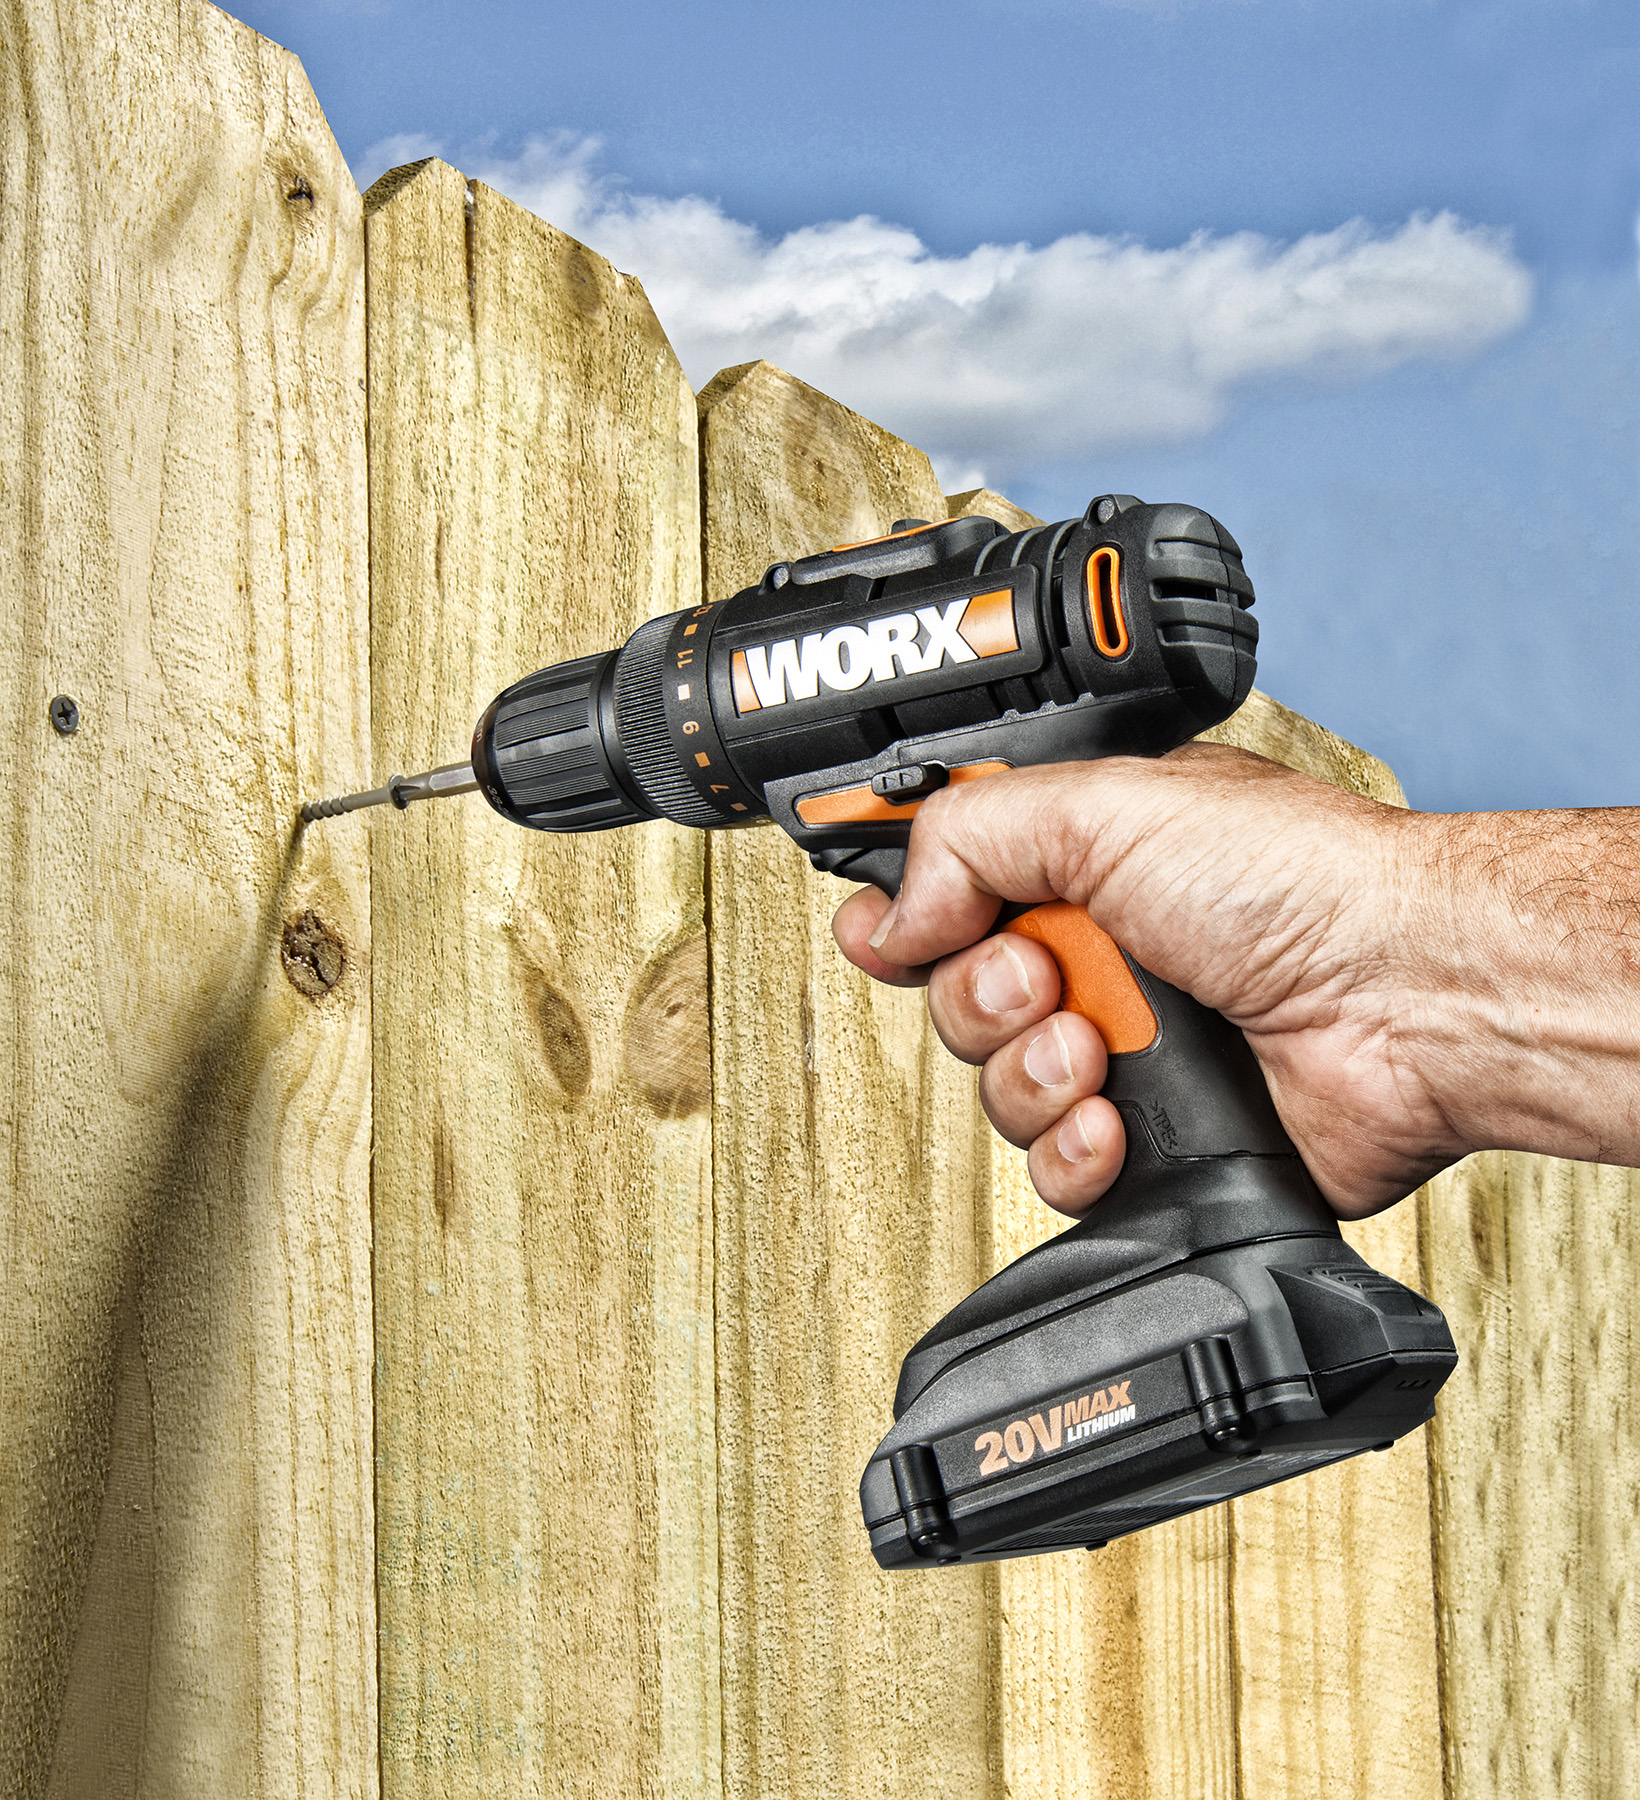 WORX 20V Drill & Driver repairing fence.